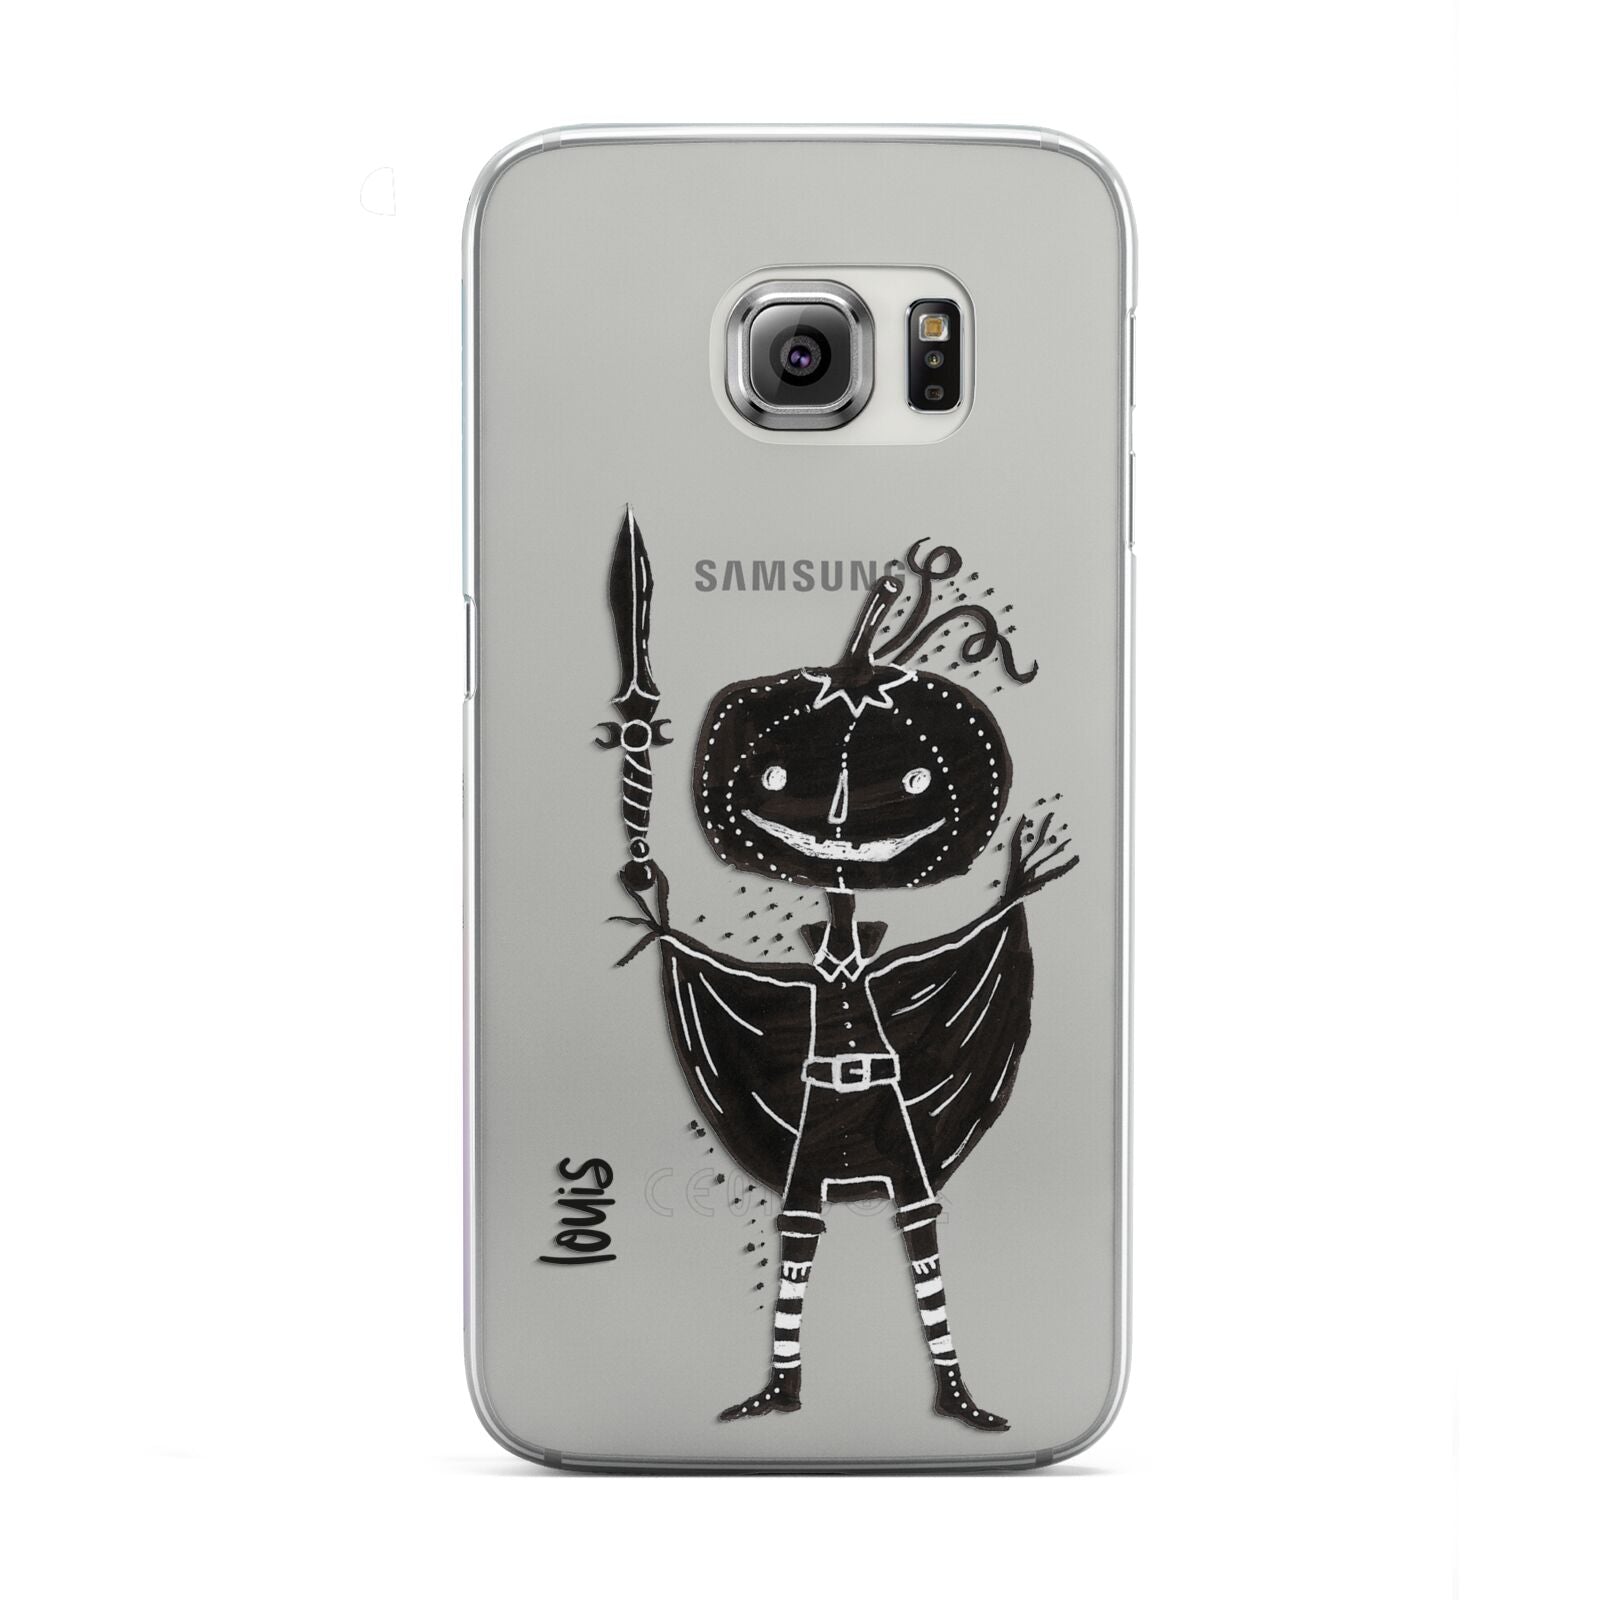 Pumpkin Head Personalised Samsung Galaxy S6 Edge Case